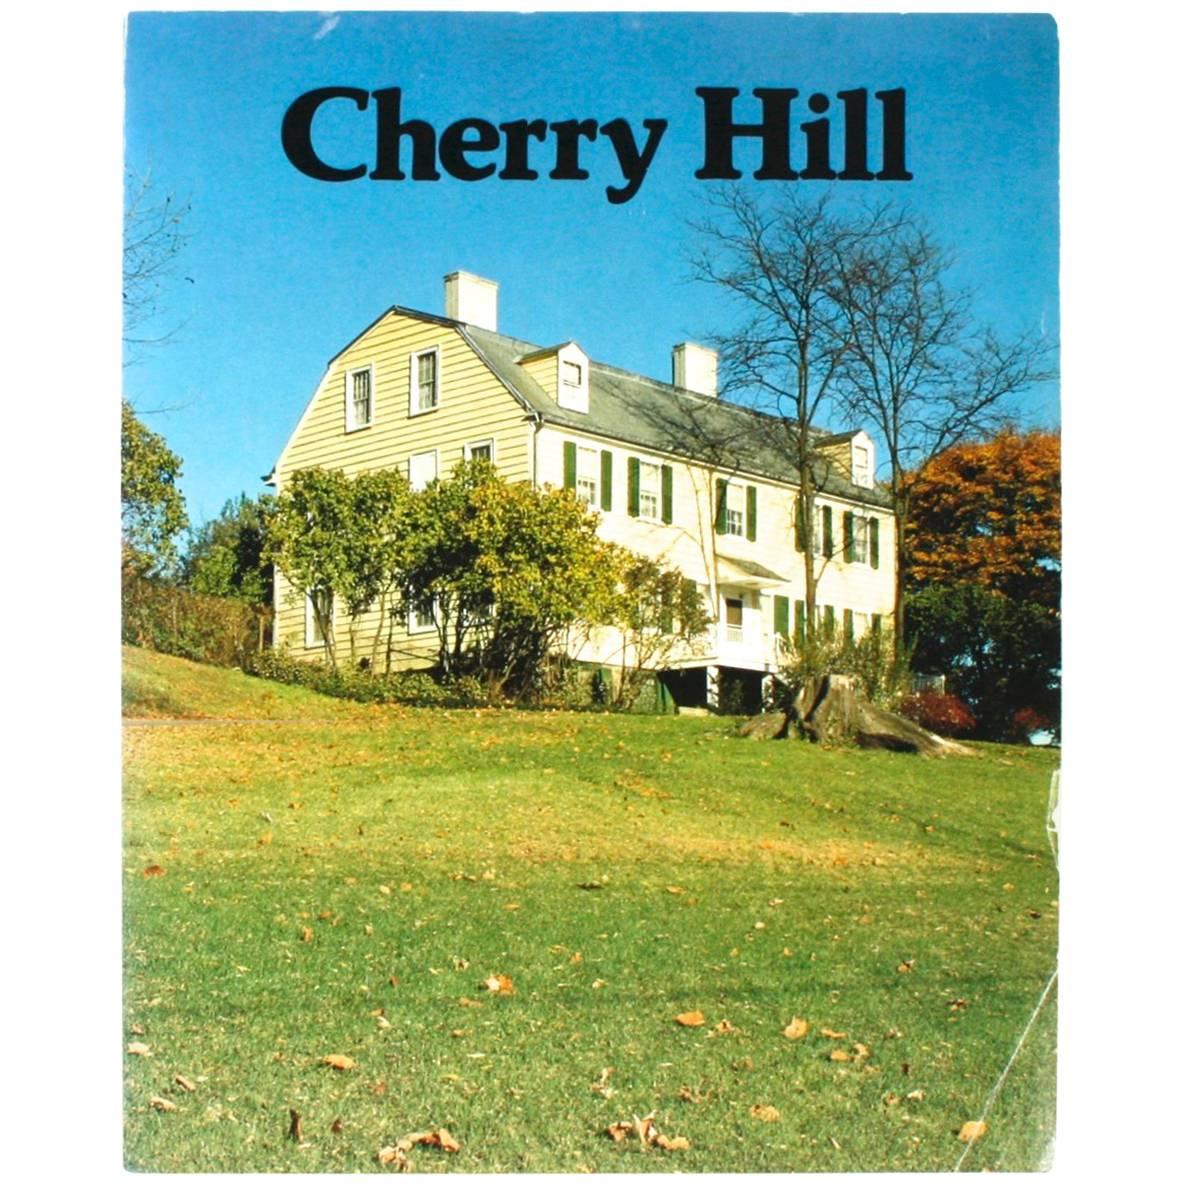 "Cherry Hill" par Roderic H. Blackburn